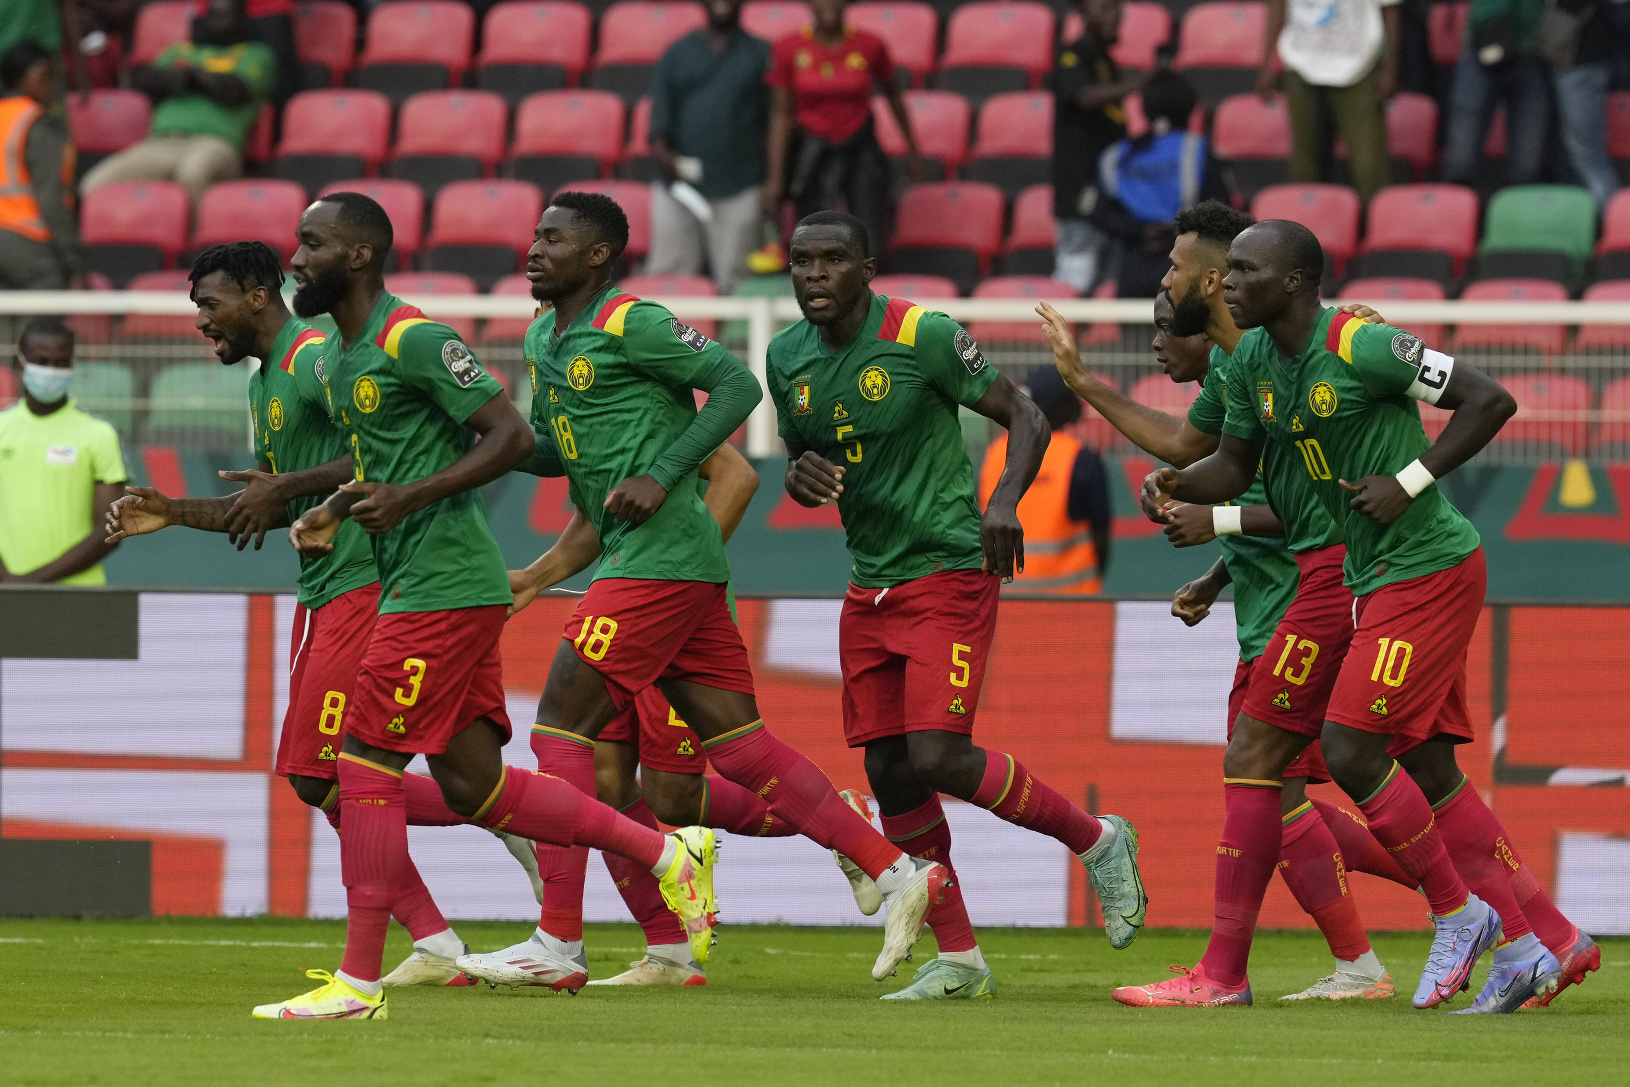 Radosť futbalistov Kamerunu